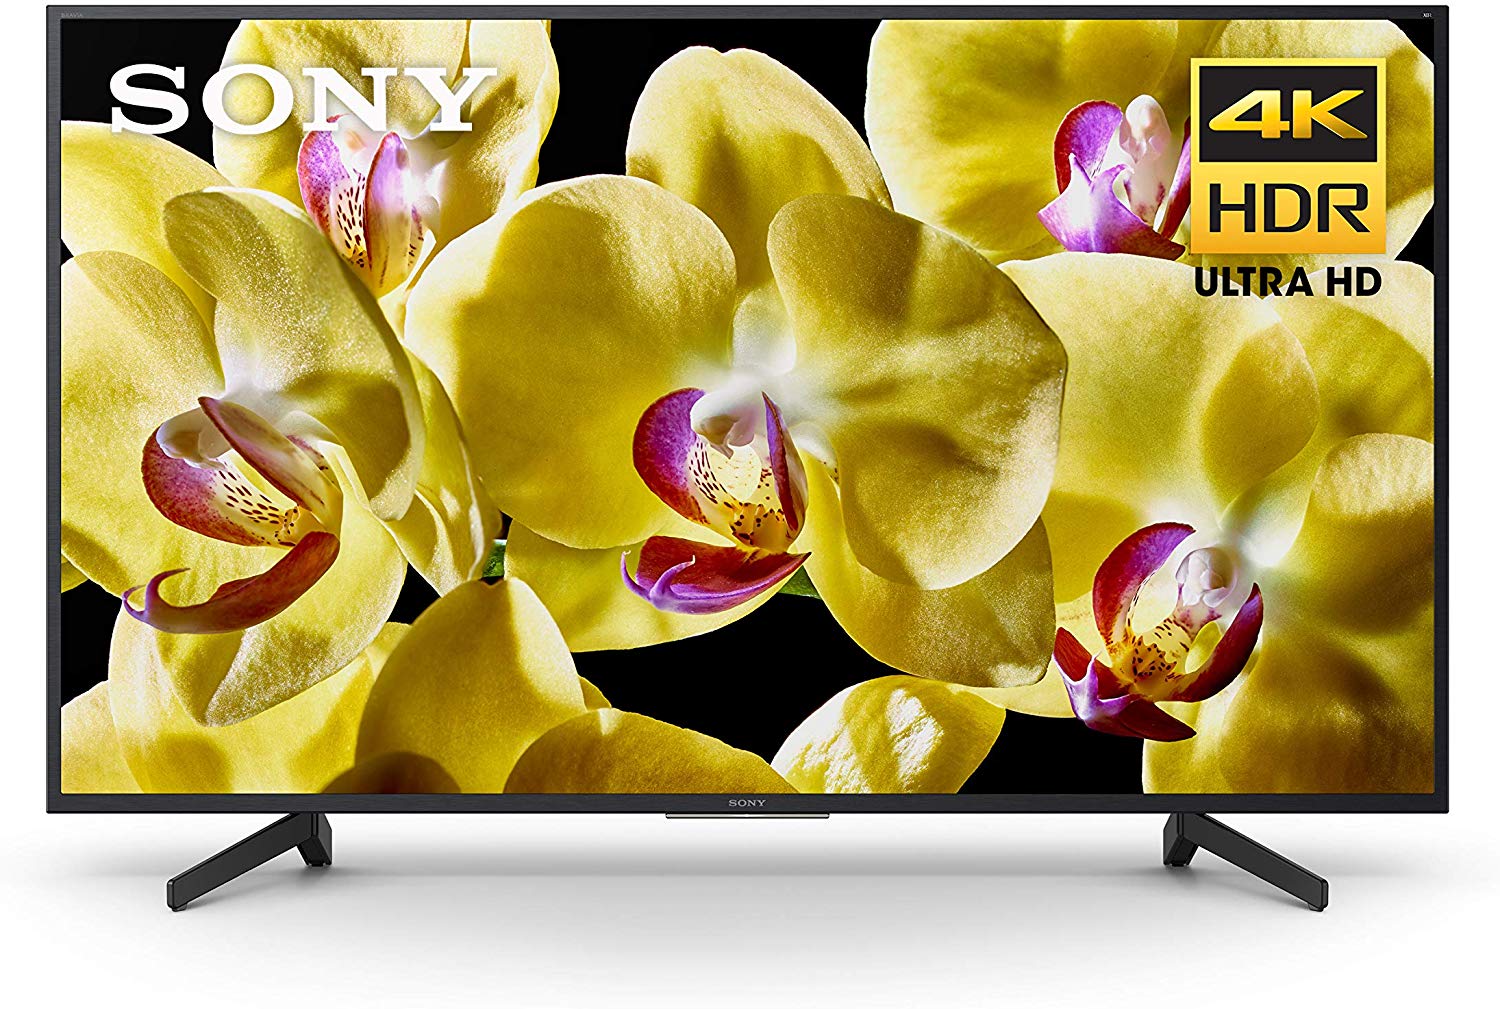 38% Off Sony X800G 55 Inch 4K Ultra HD Smart LED TV